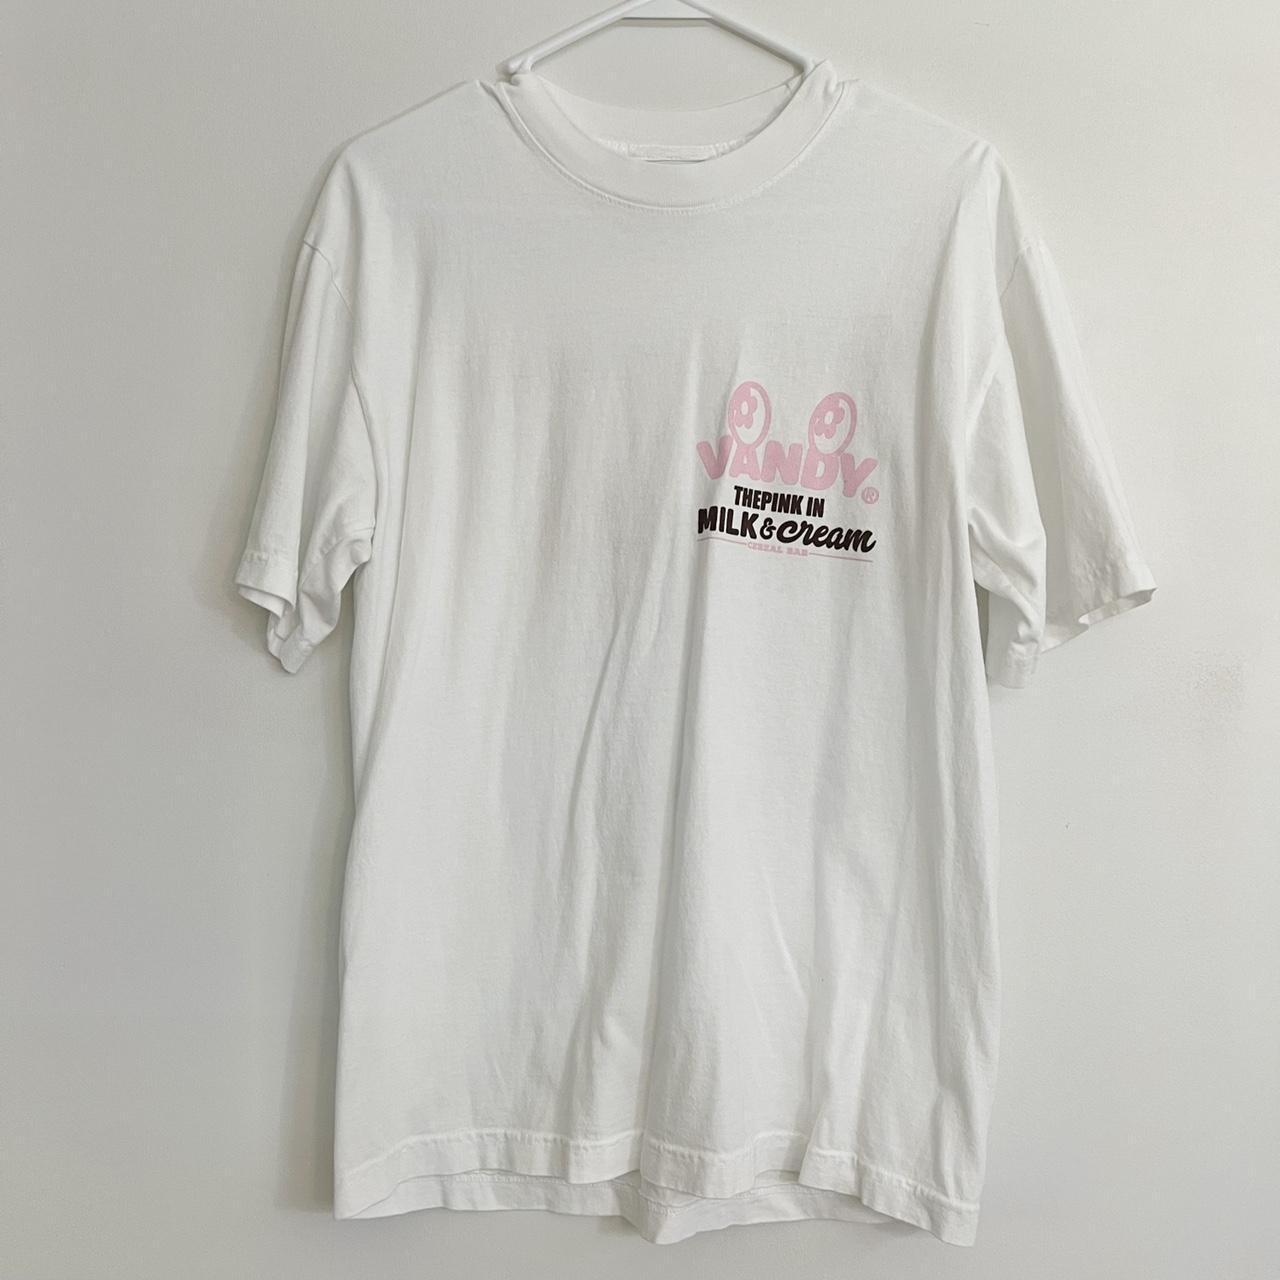 Vandy the Pink Men's White T-shirt (2)